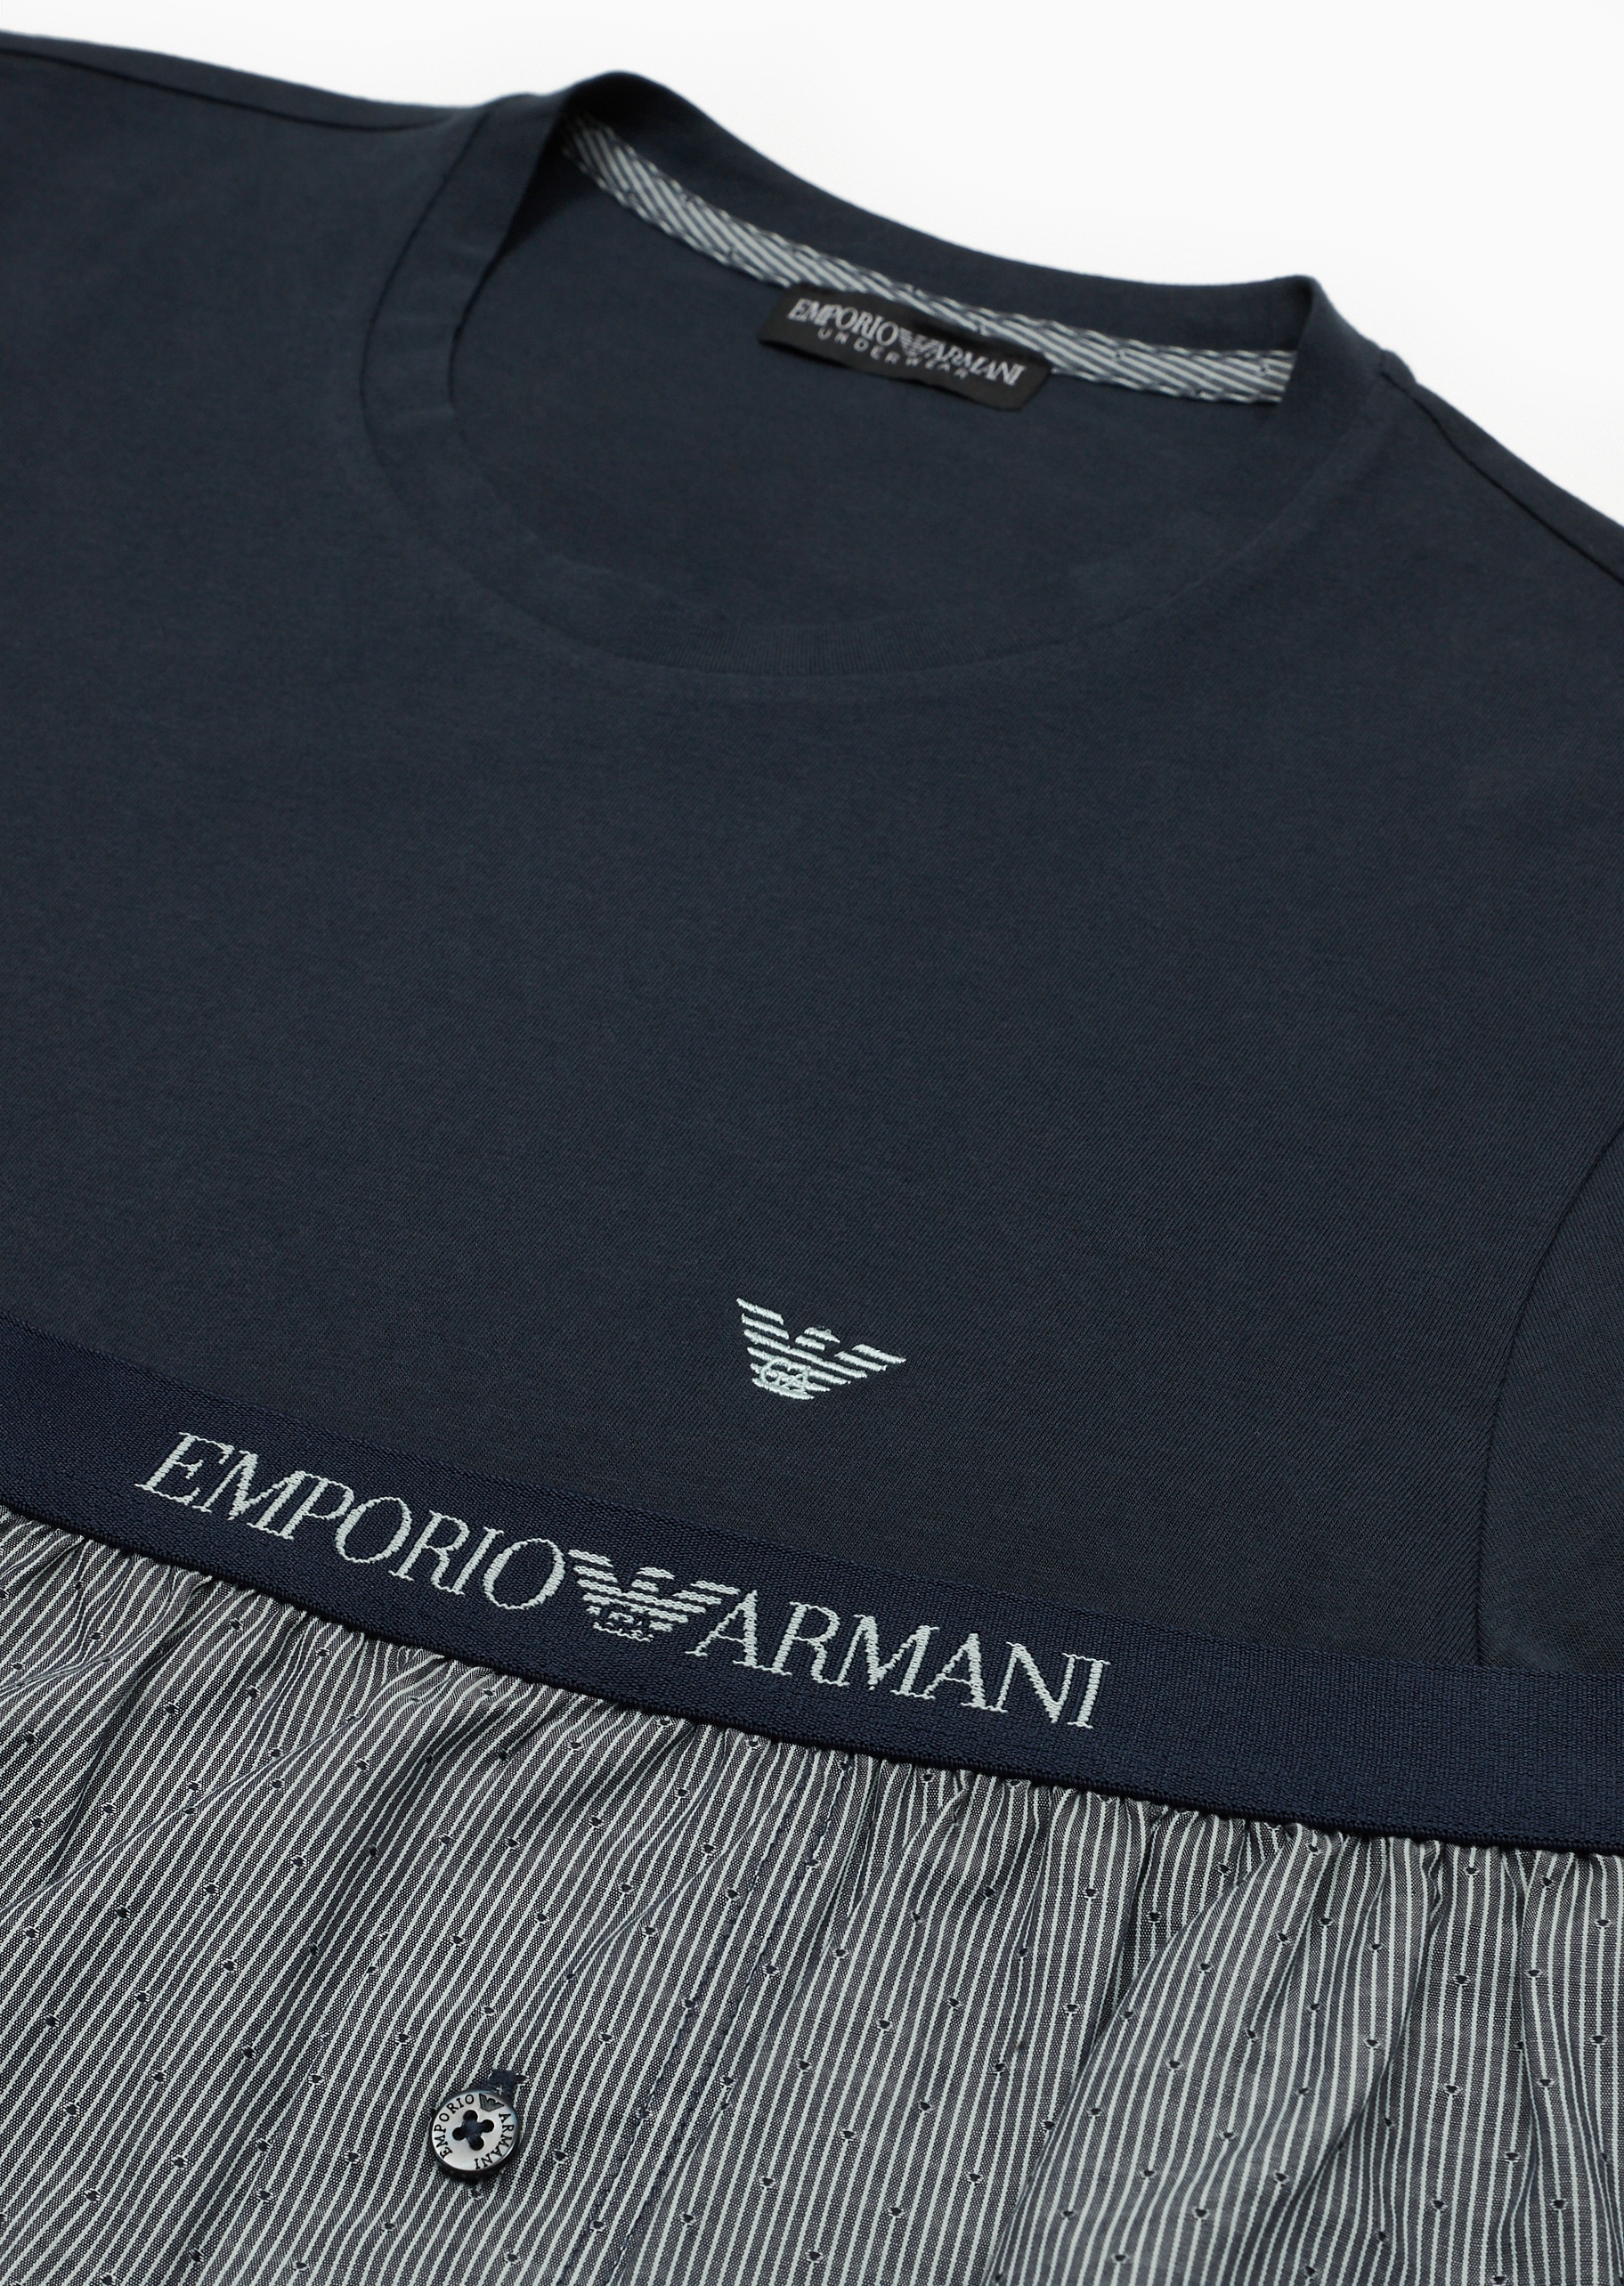 Emporio Armani 男士全棉短袖T恤平角短裤休闲家居睡衣套装